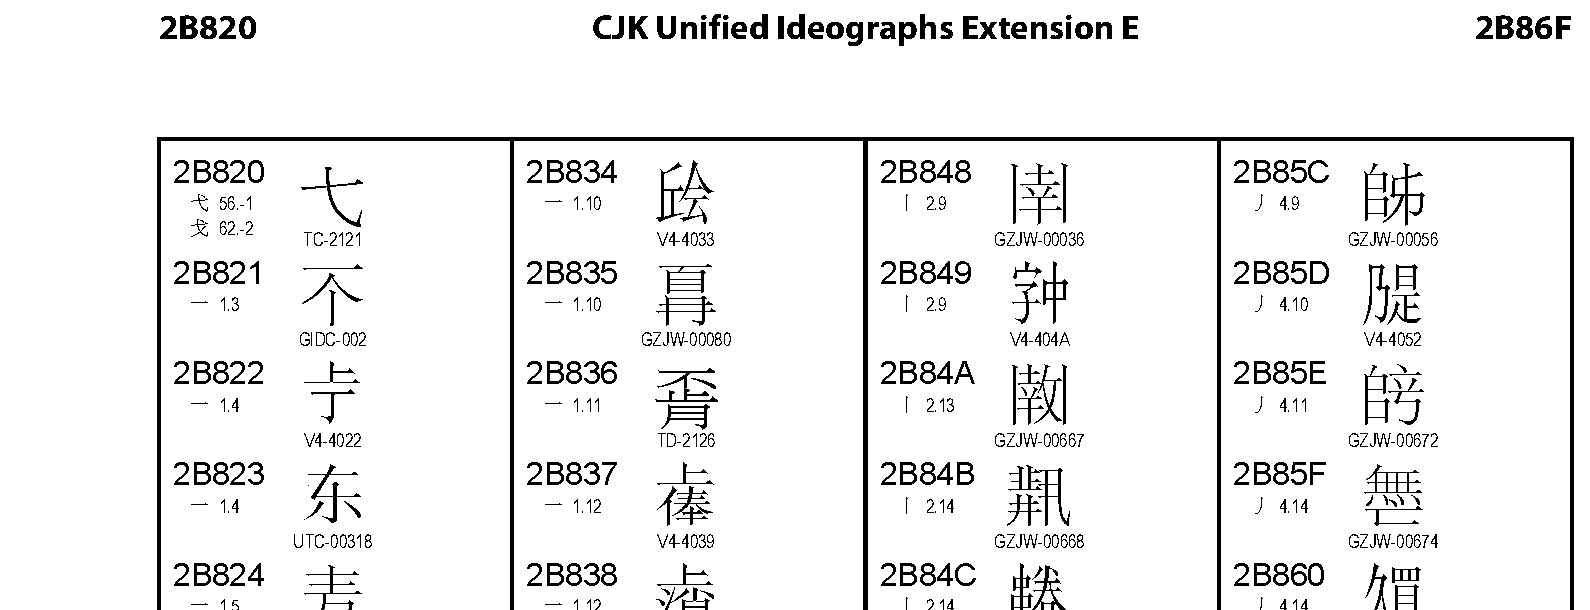 Unicode - CJK Unified Ideographs Extension E